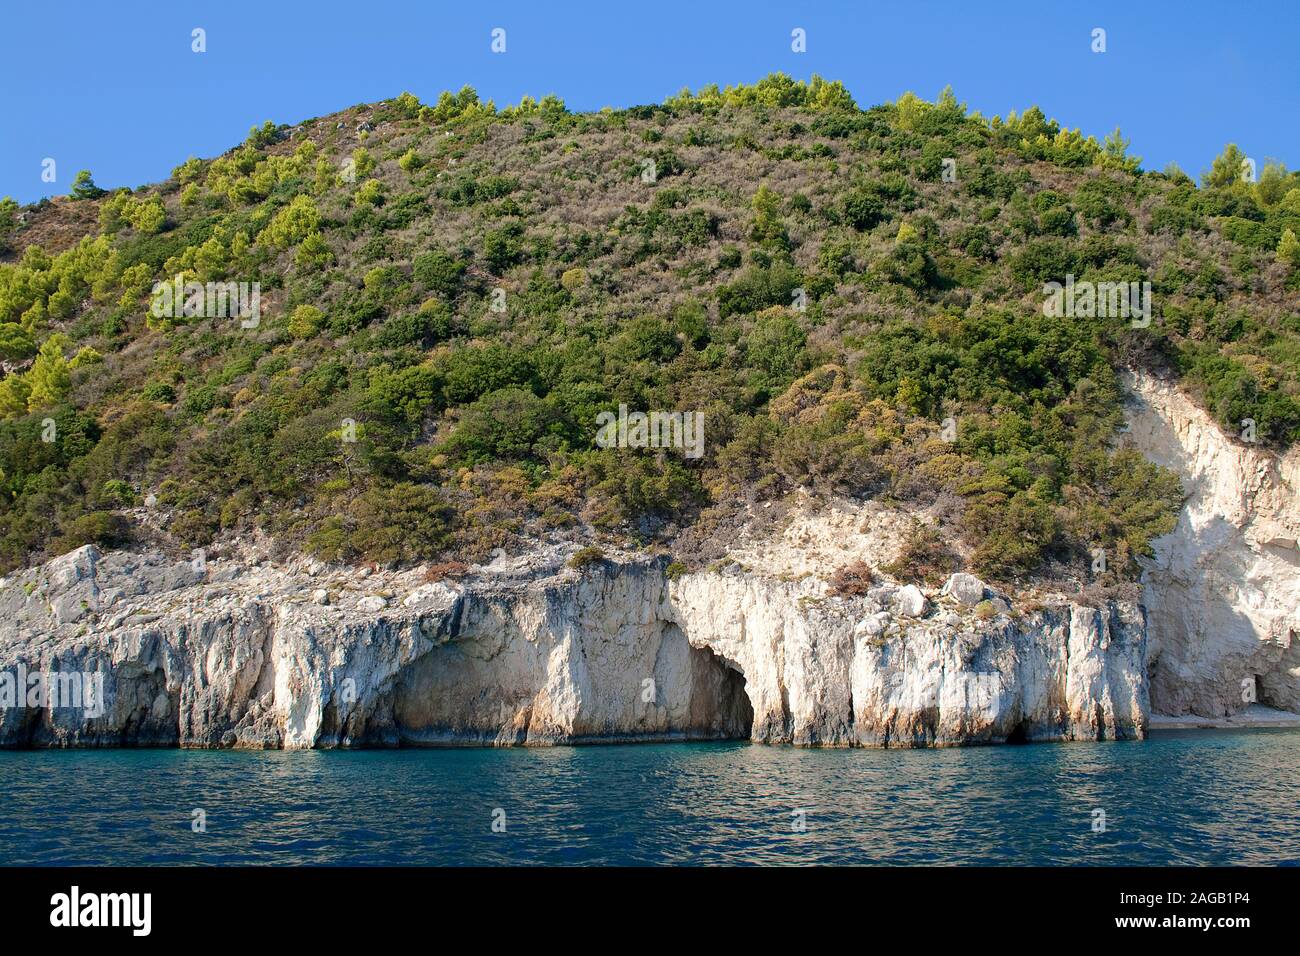 Costa rocosa en Limni Keriou, isla de Zakynthos, Grecia Foto de stock